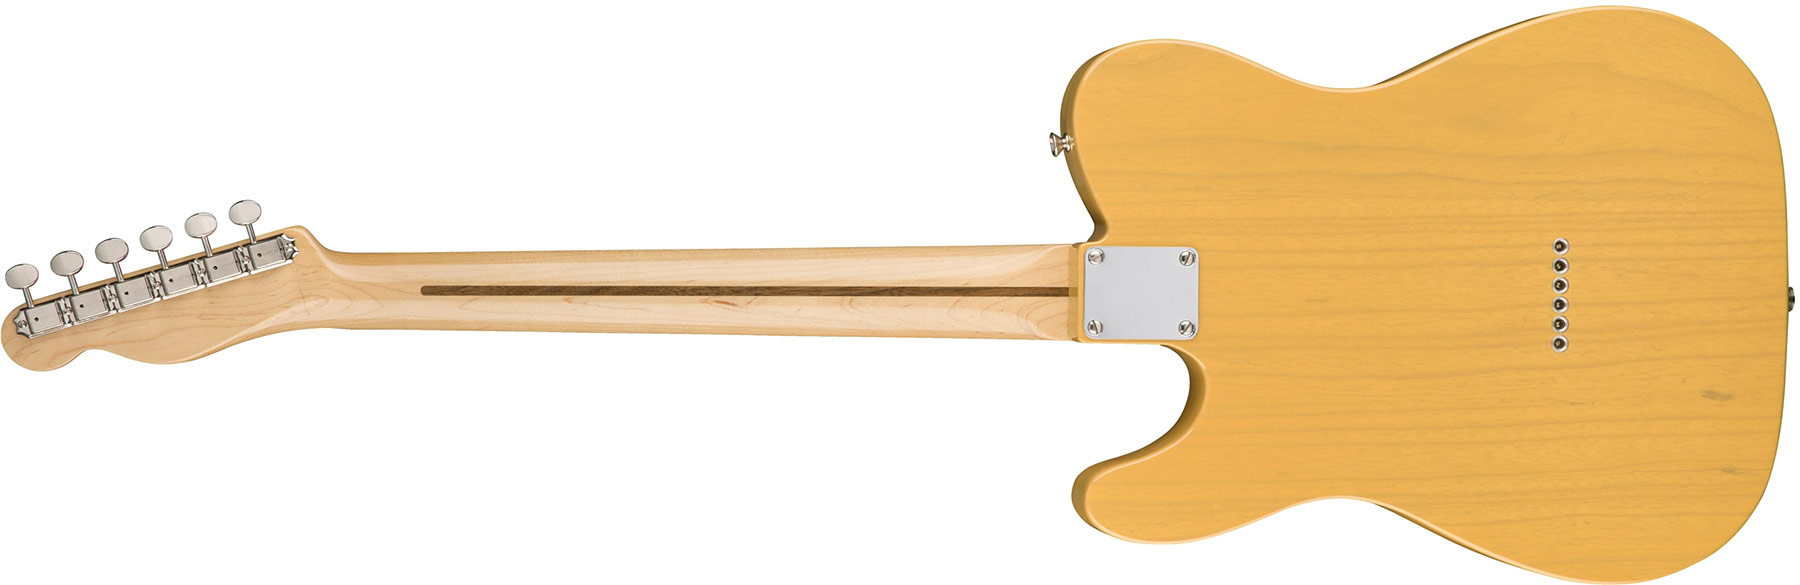 Fender Tele '50s American Original Usa Mn - Butterscotch Blonde - Guitarra eléctrica con forma de tel - Variation 3